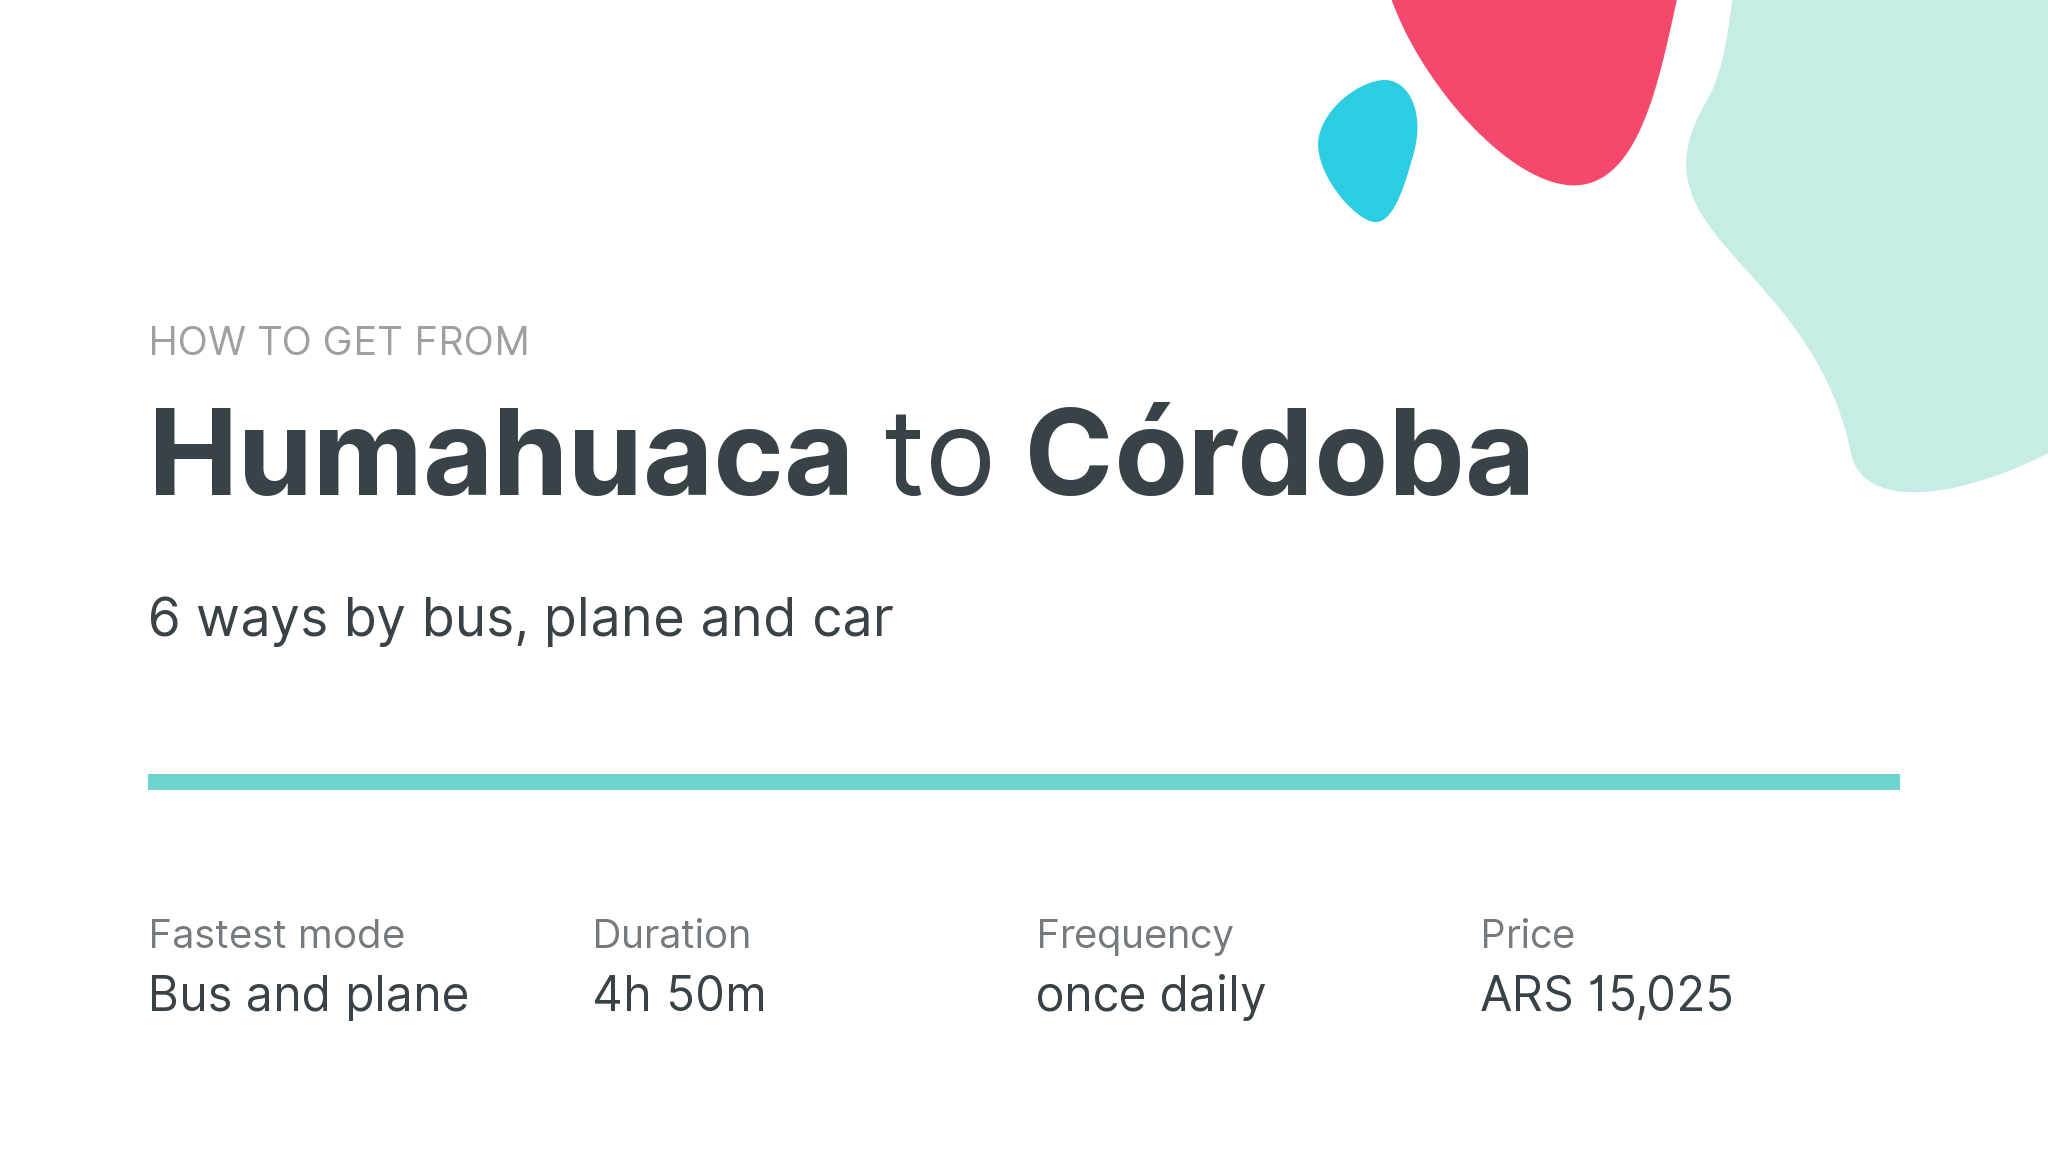 How do I get from Humahuaca to Córdoba